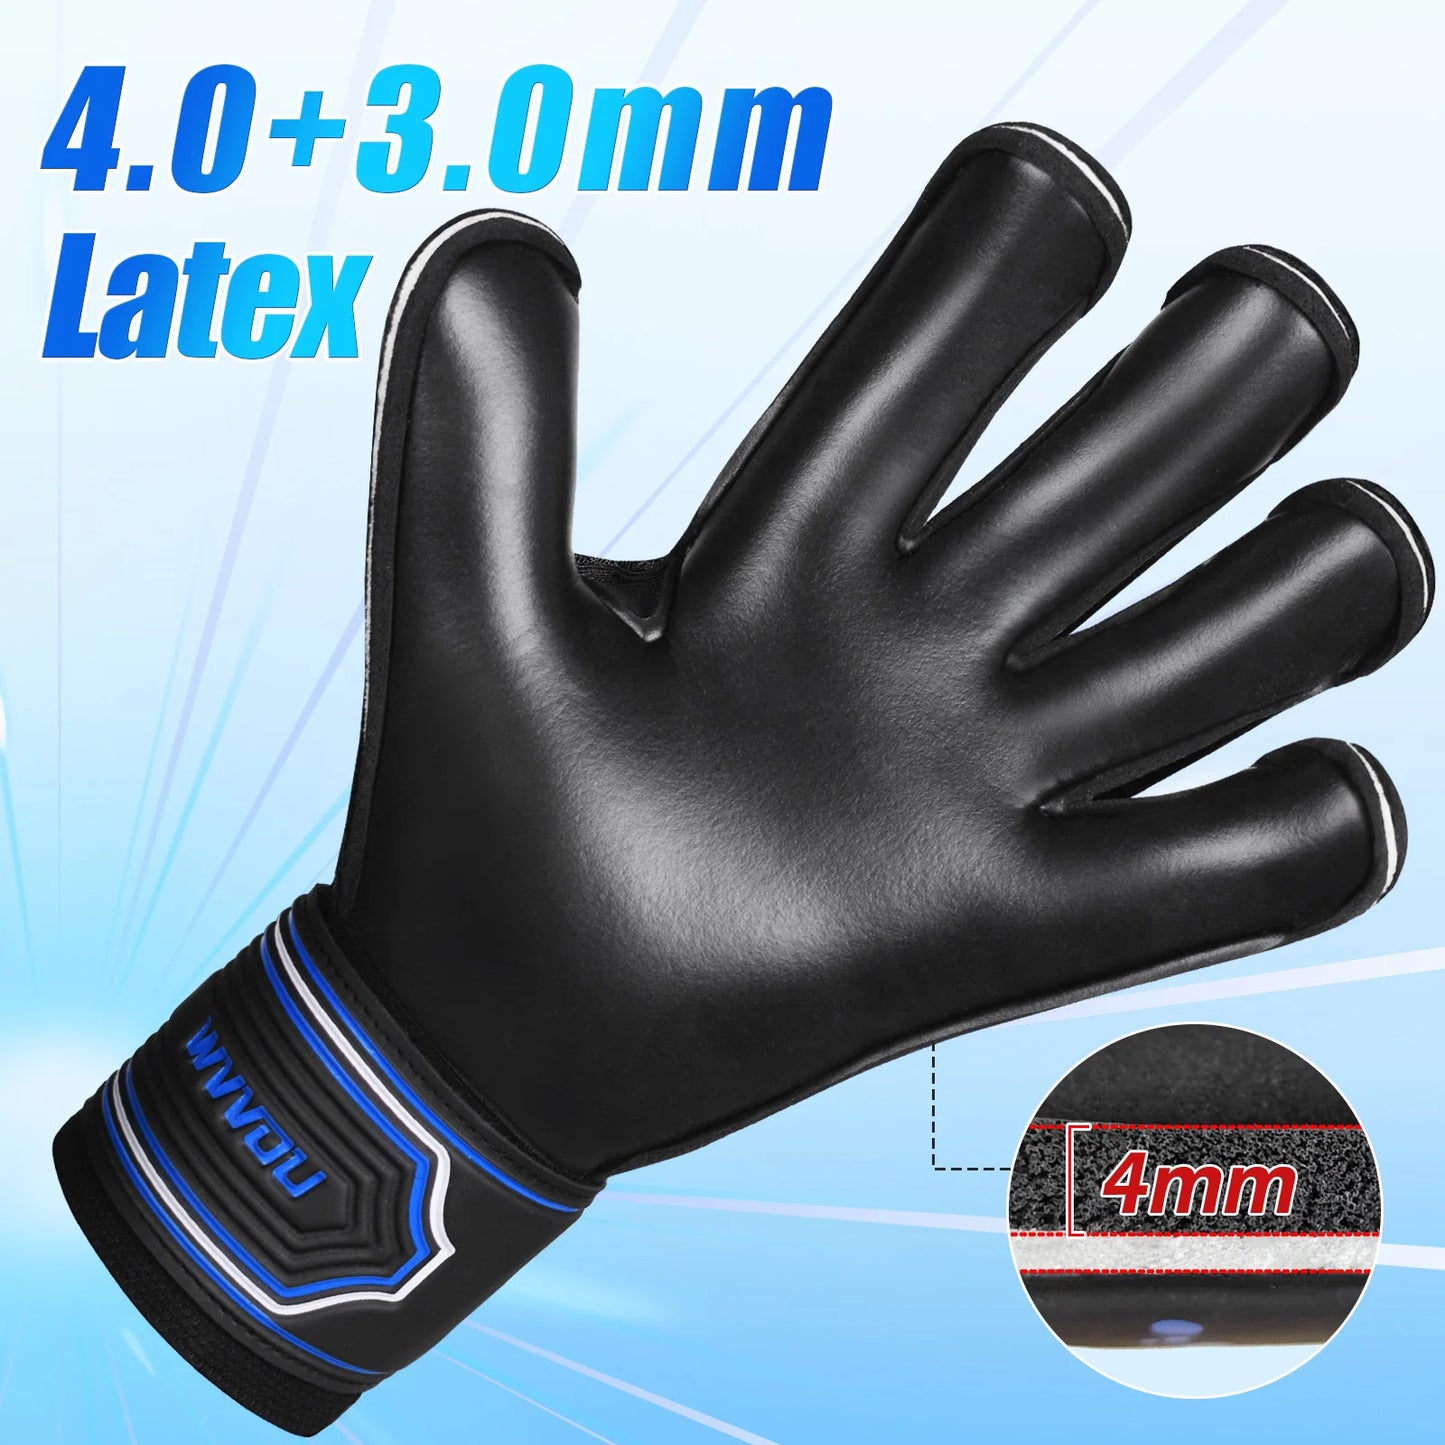 
                  
                    Soccer Goalie Gloves Youth Adult, Pro-Level Goalkeeper Gloves, High Performance Soccer Gloves with Pro-Tek Fingersave,
                  
                